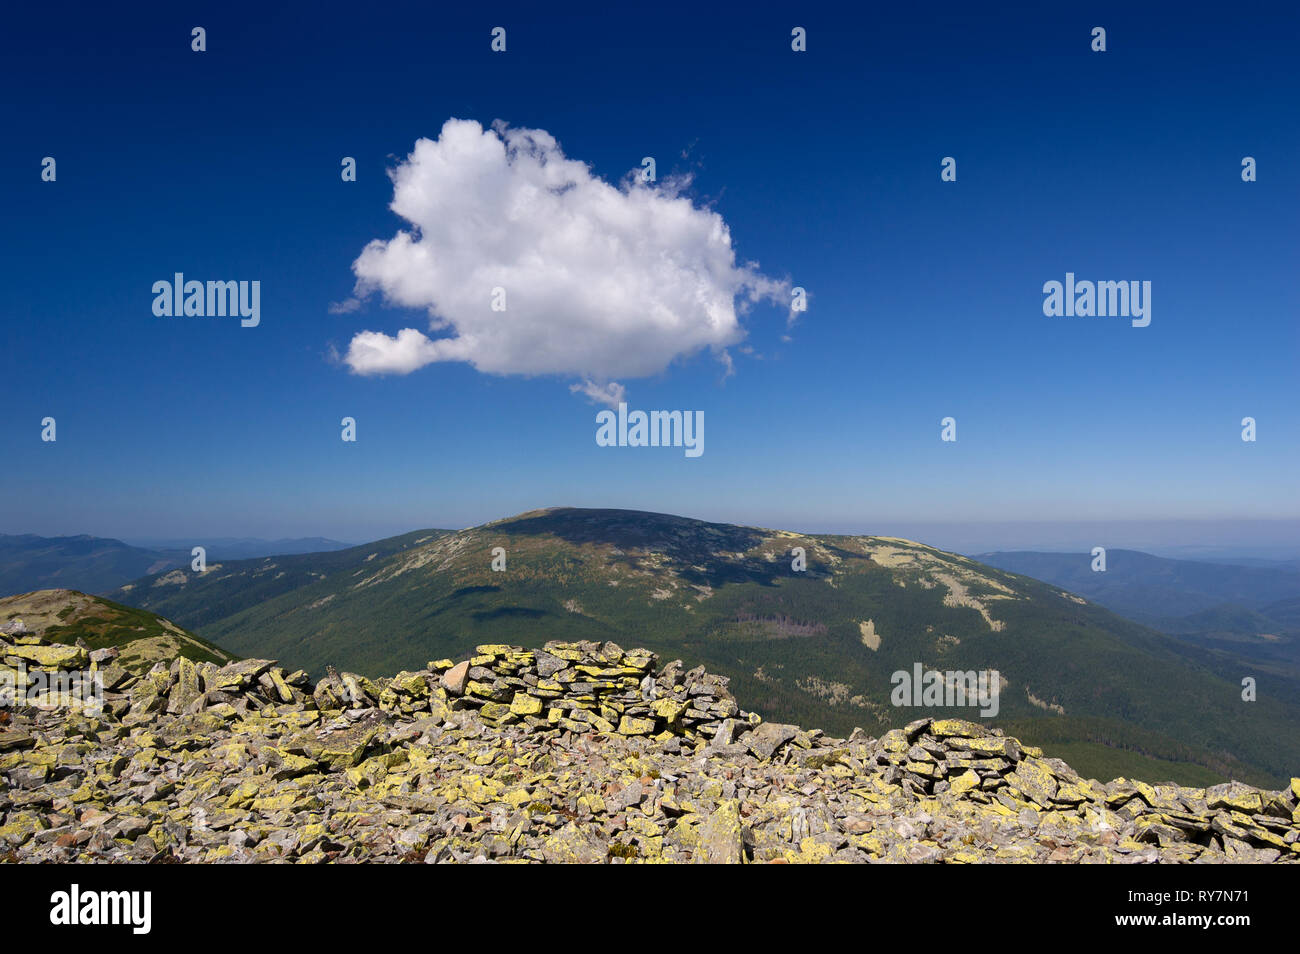 Cumulus cloud in the blue sky above the mountain range. Summer landscape in sunny weather. Carpathians, Ukraine, Europe Stock Photo